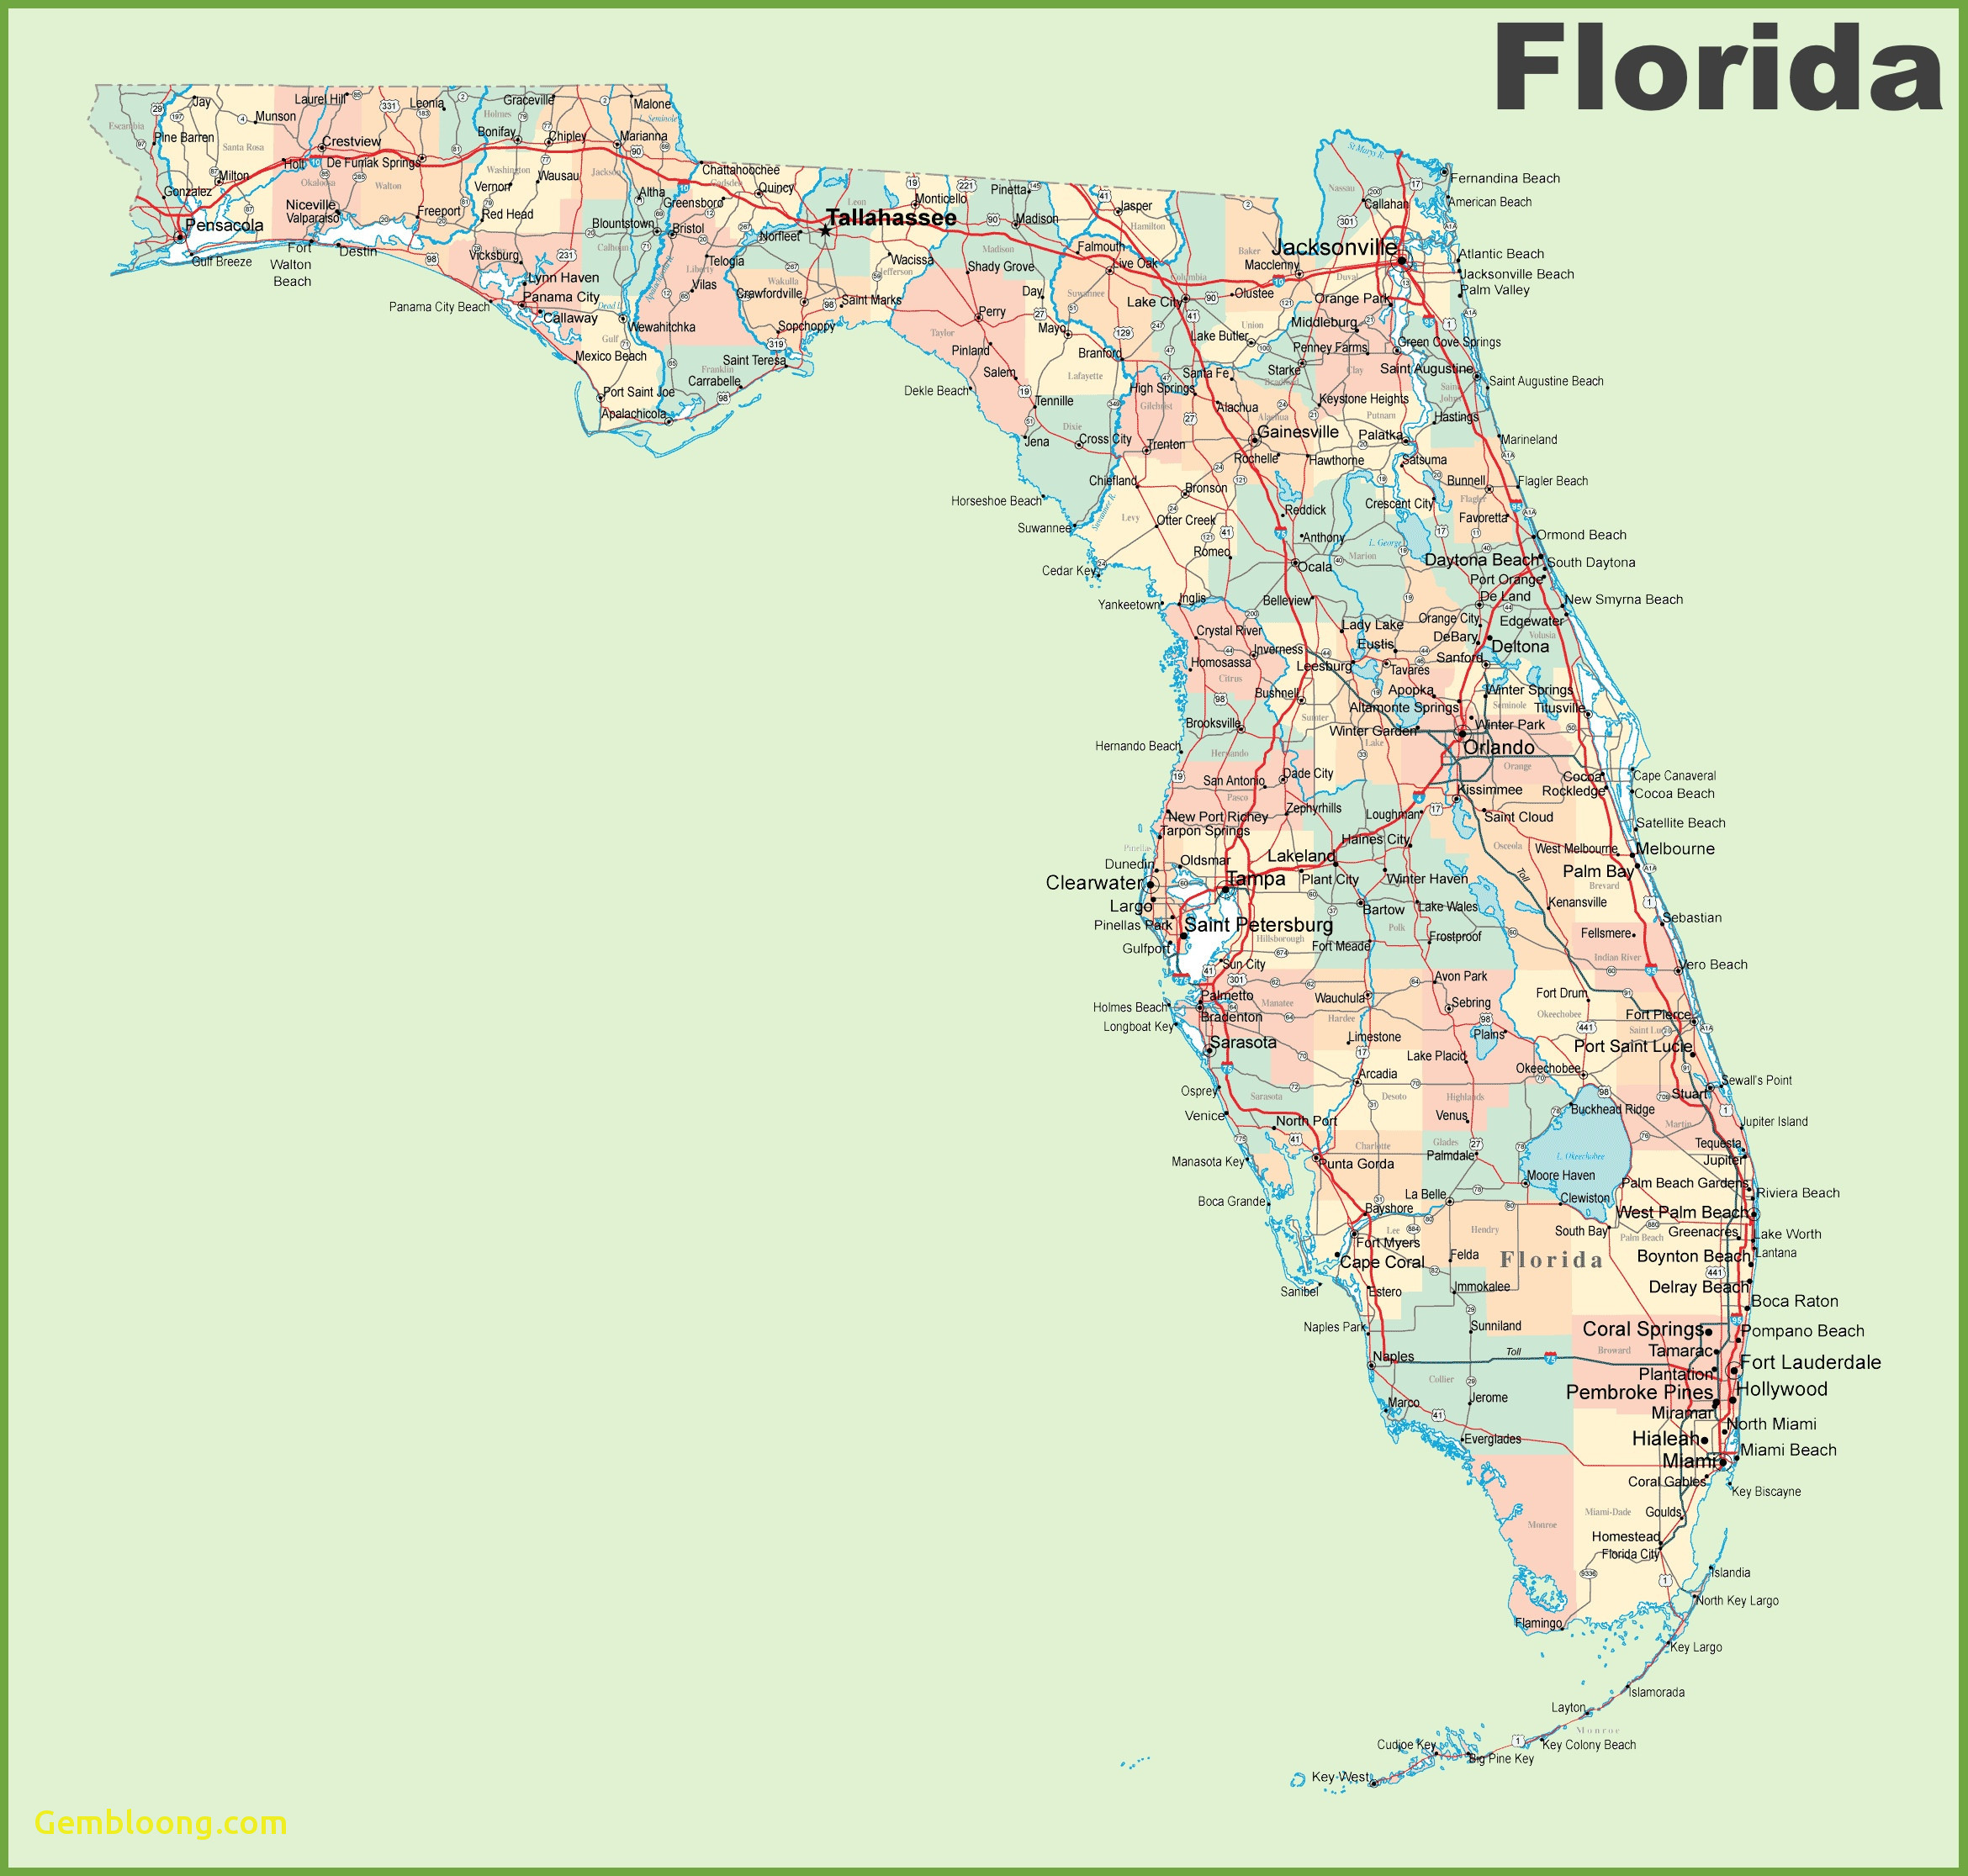 Cocoa Beach Florida Map From Etiforum 1 - Ameliabd - Where Is Cocoa Beach Florida On The Map